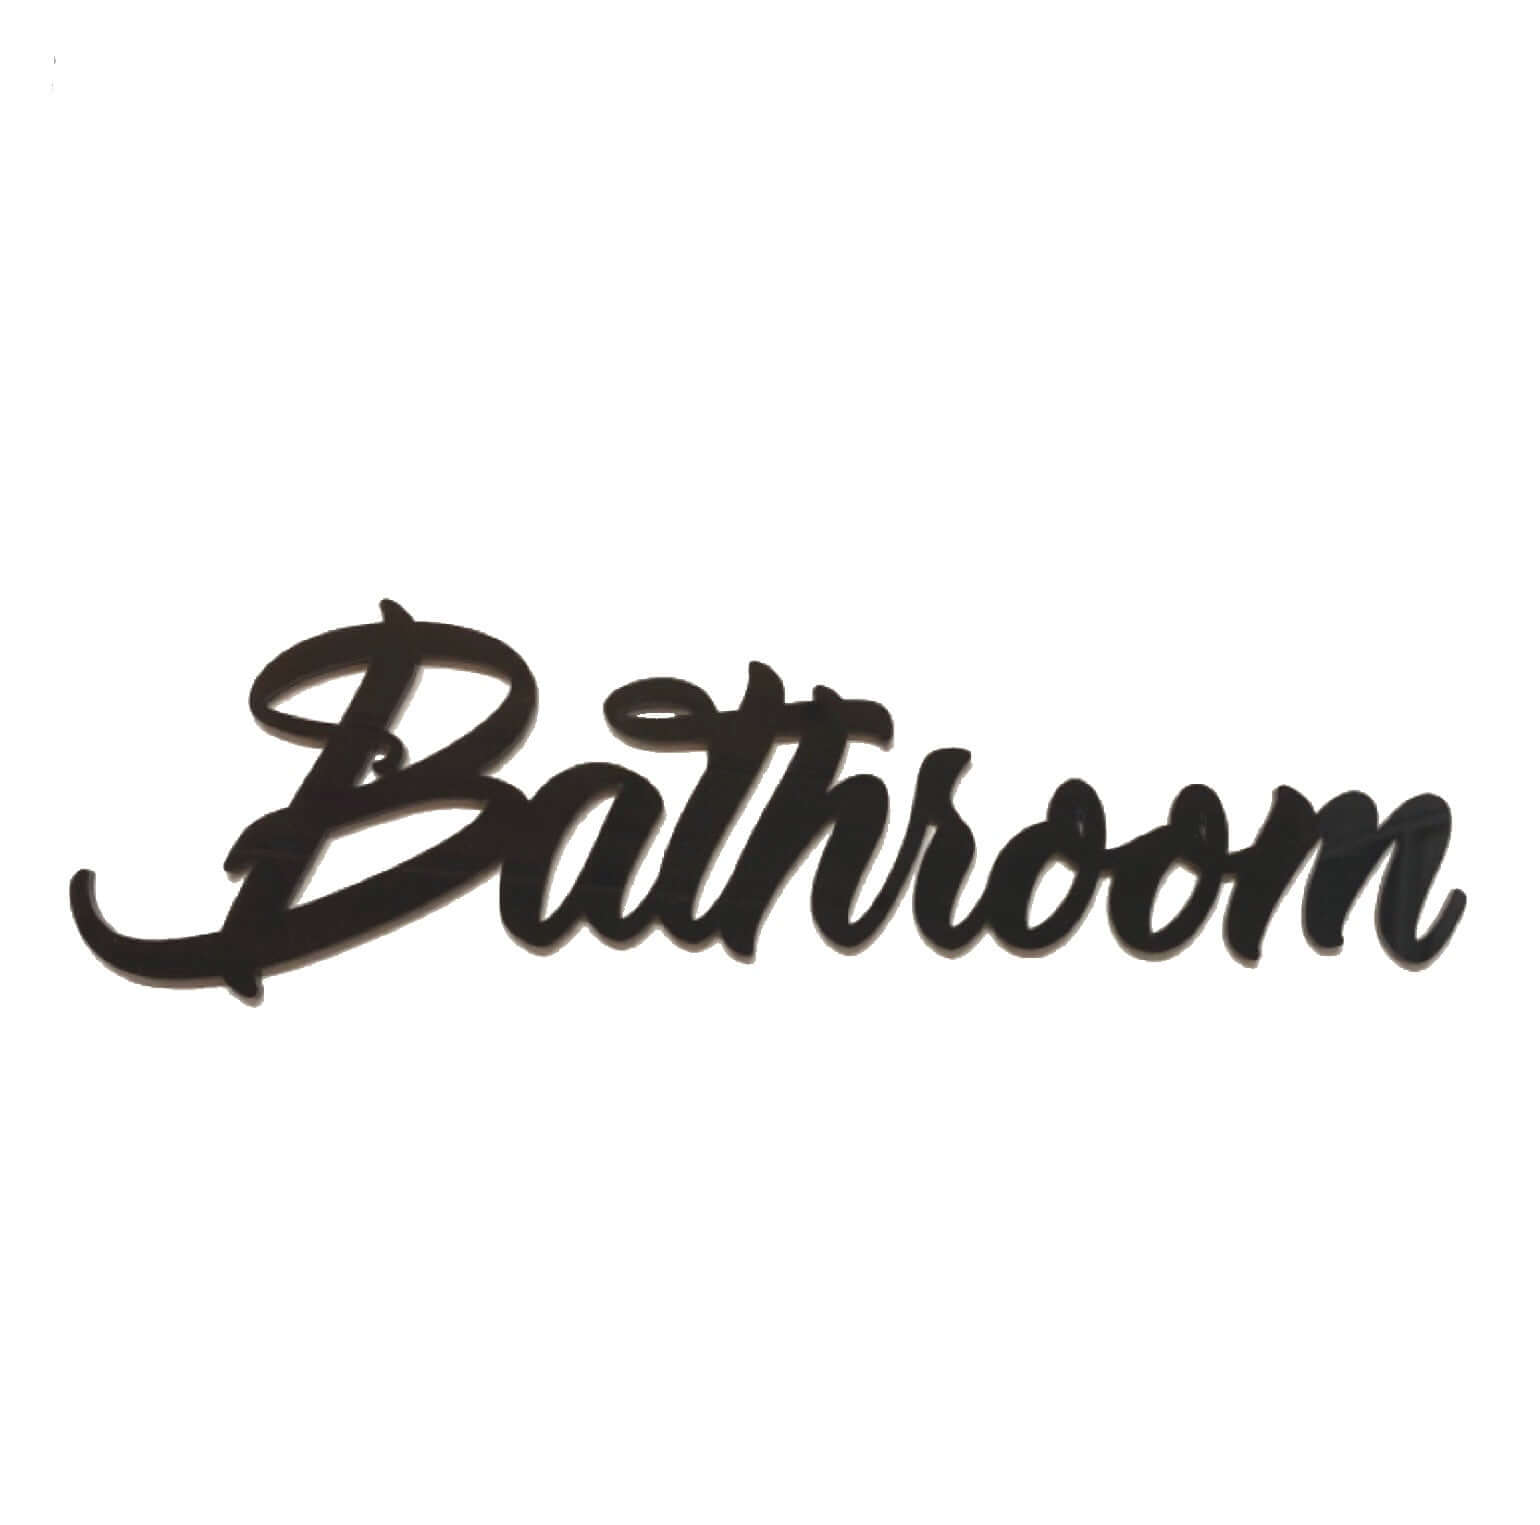 Bathroom Door Word Acrylic Wall Art Vintage - The Renmy Store Homewares & Gifts 